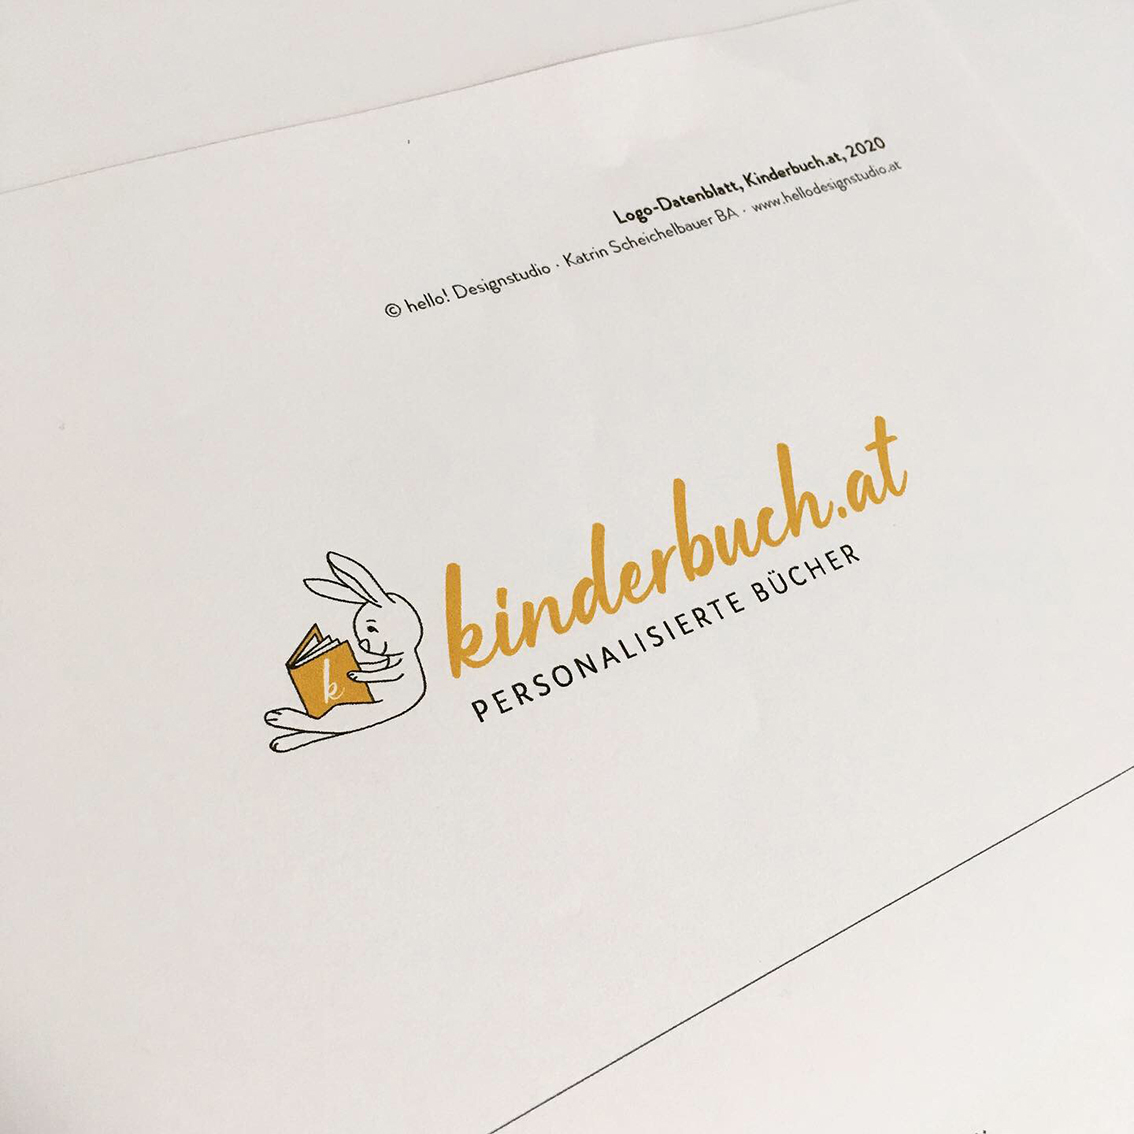 Kinderbuch.at, Logodesign, Logogestaltung, Logo, Grafikdesign, Kinderbuch, Kinderlogo, Buchlogo, hello! Designstudio, Katrin Scheichelbauer